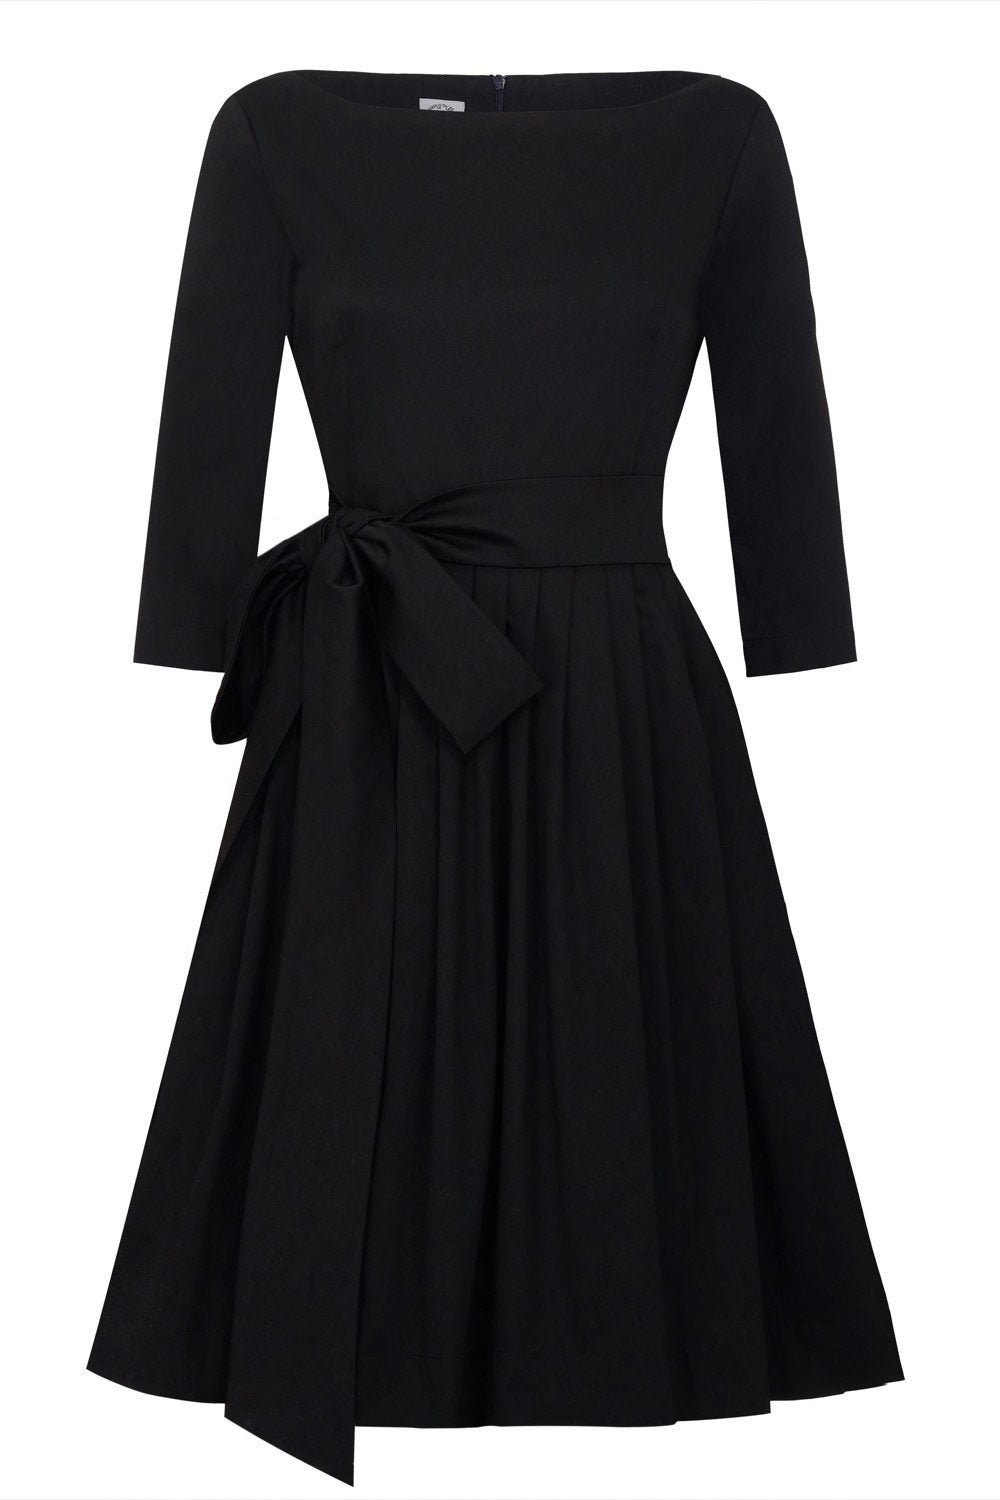 Little Black Dress Bow Dress Formal Dress Modest Dress | Etsy